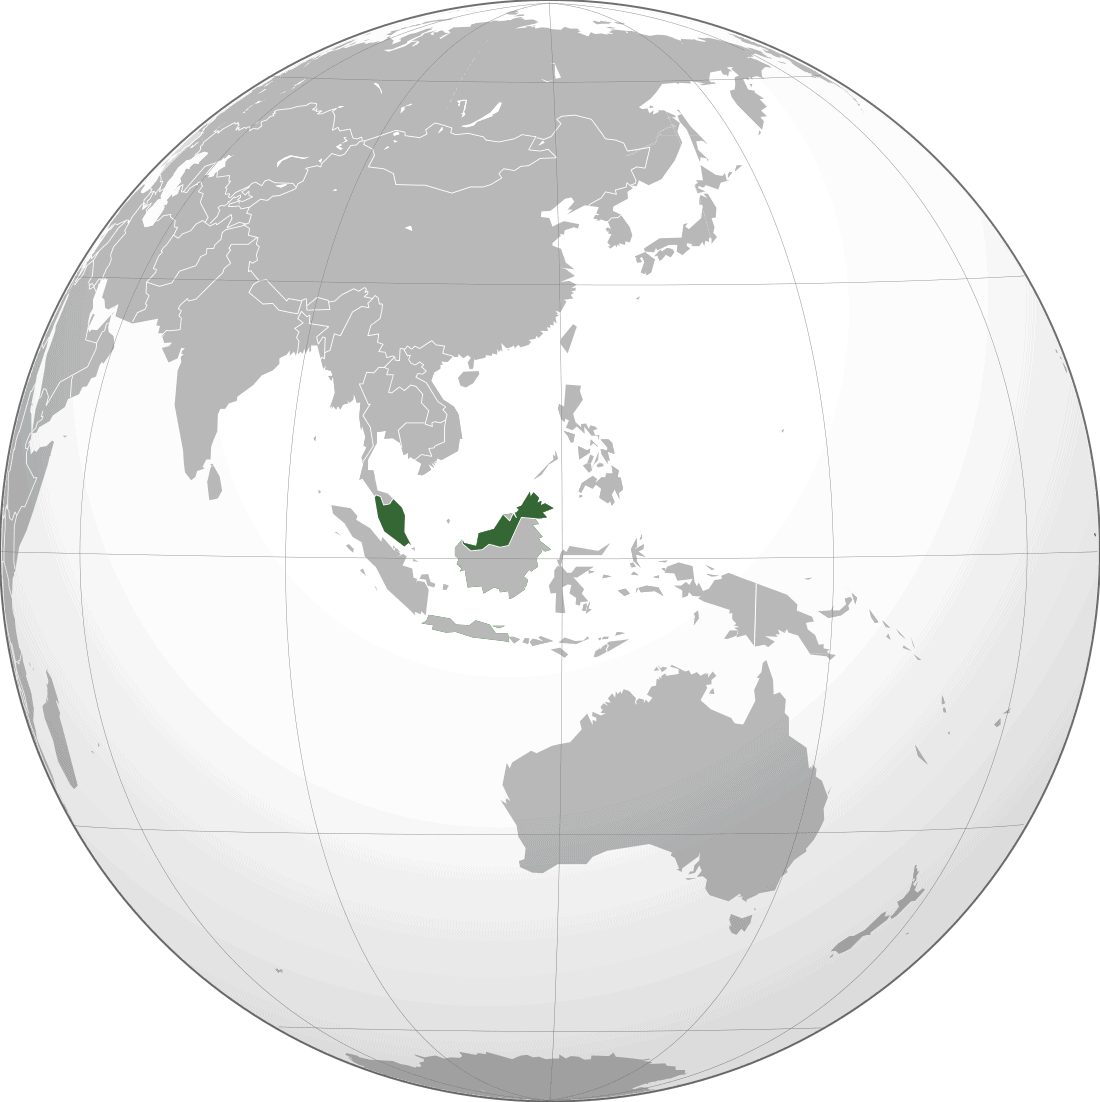 Malaysia location on the globe